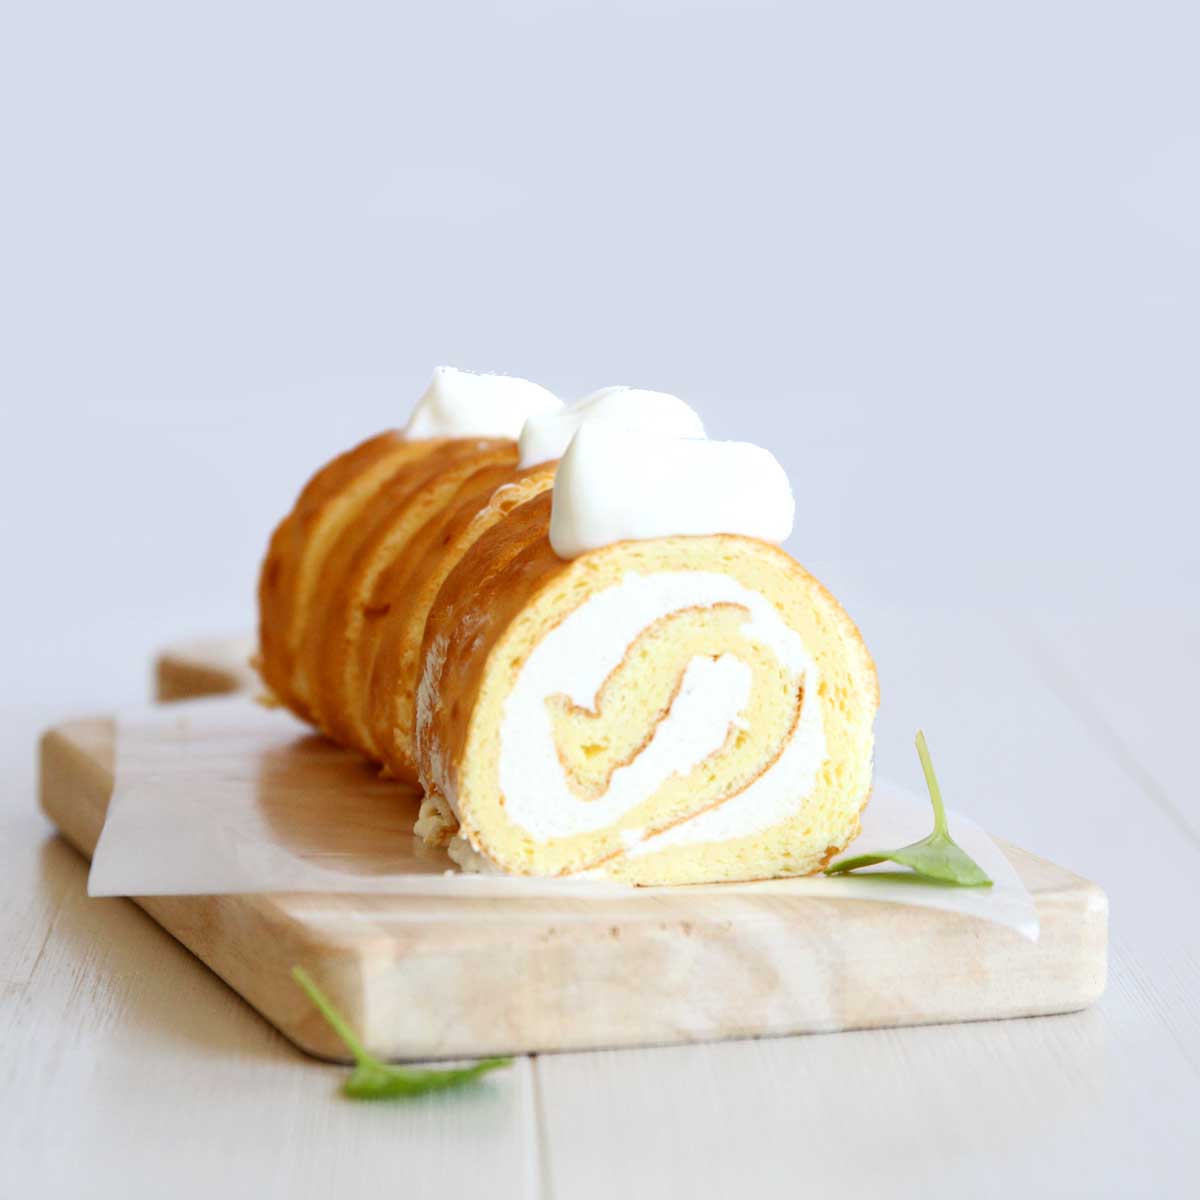 Tangy & Sweet! Greek Yogurt Swiss Roll Cake (Low Carb, Gluten-Free) - Strawberry Japanese Roll Cake